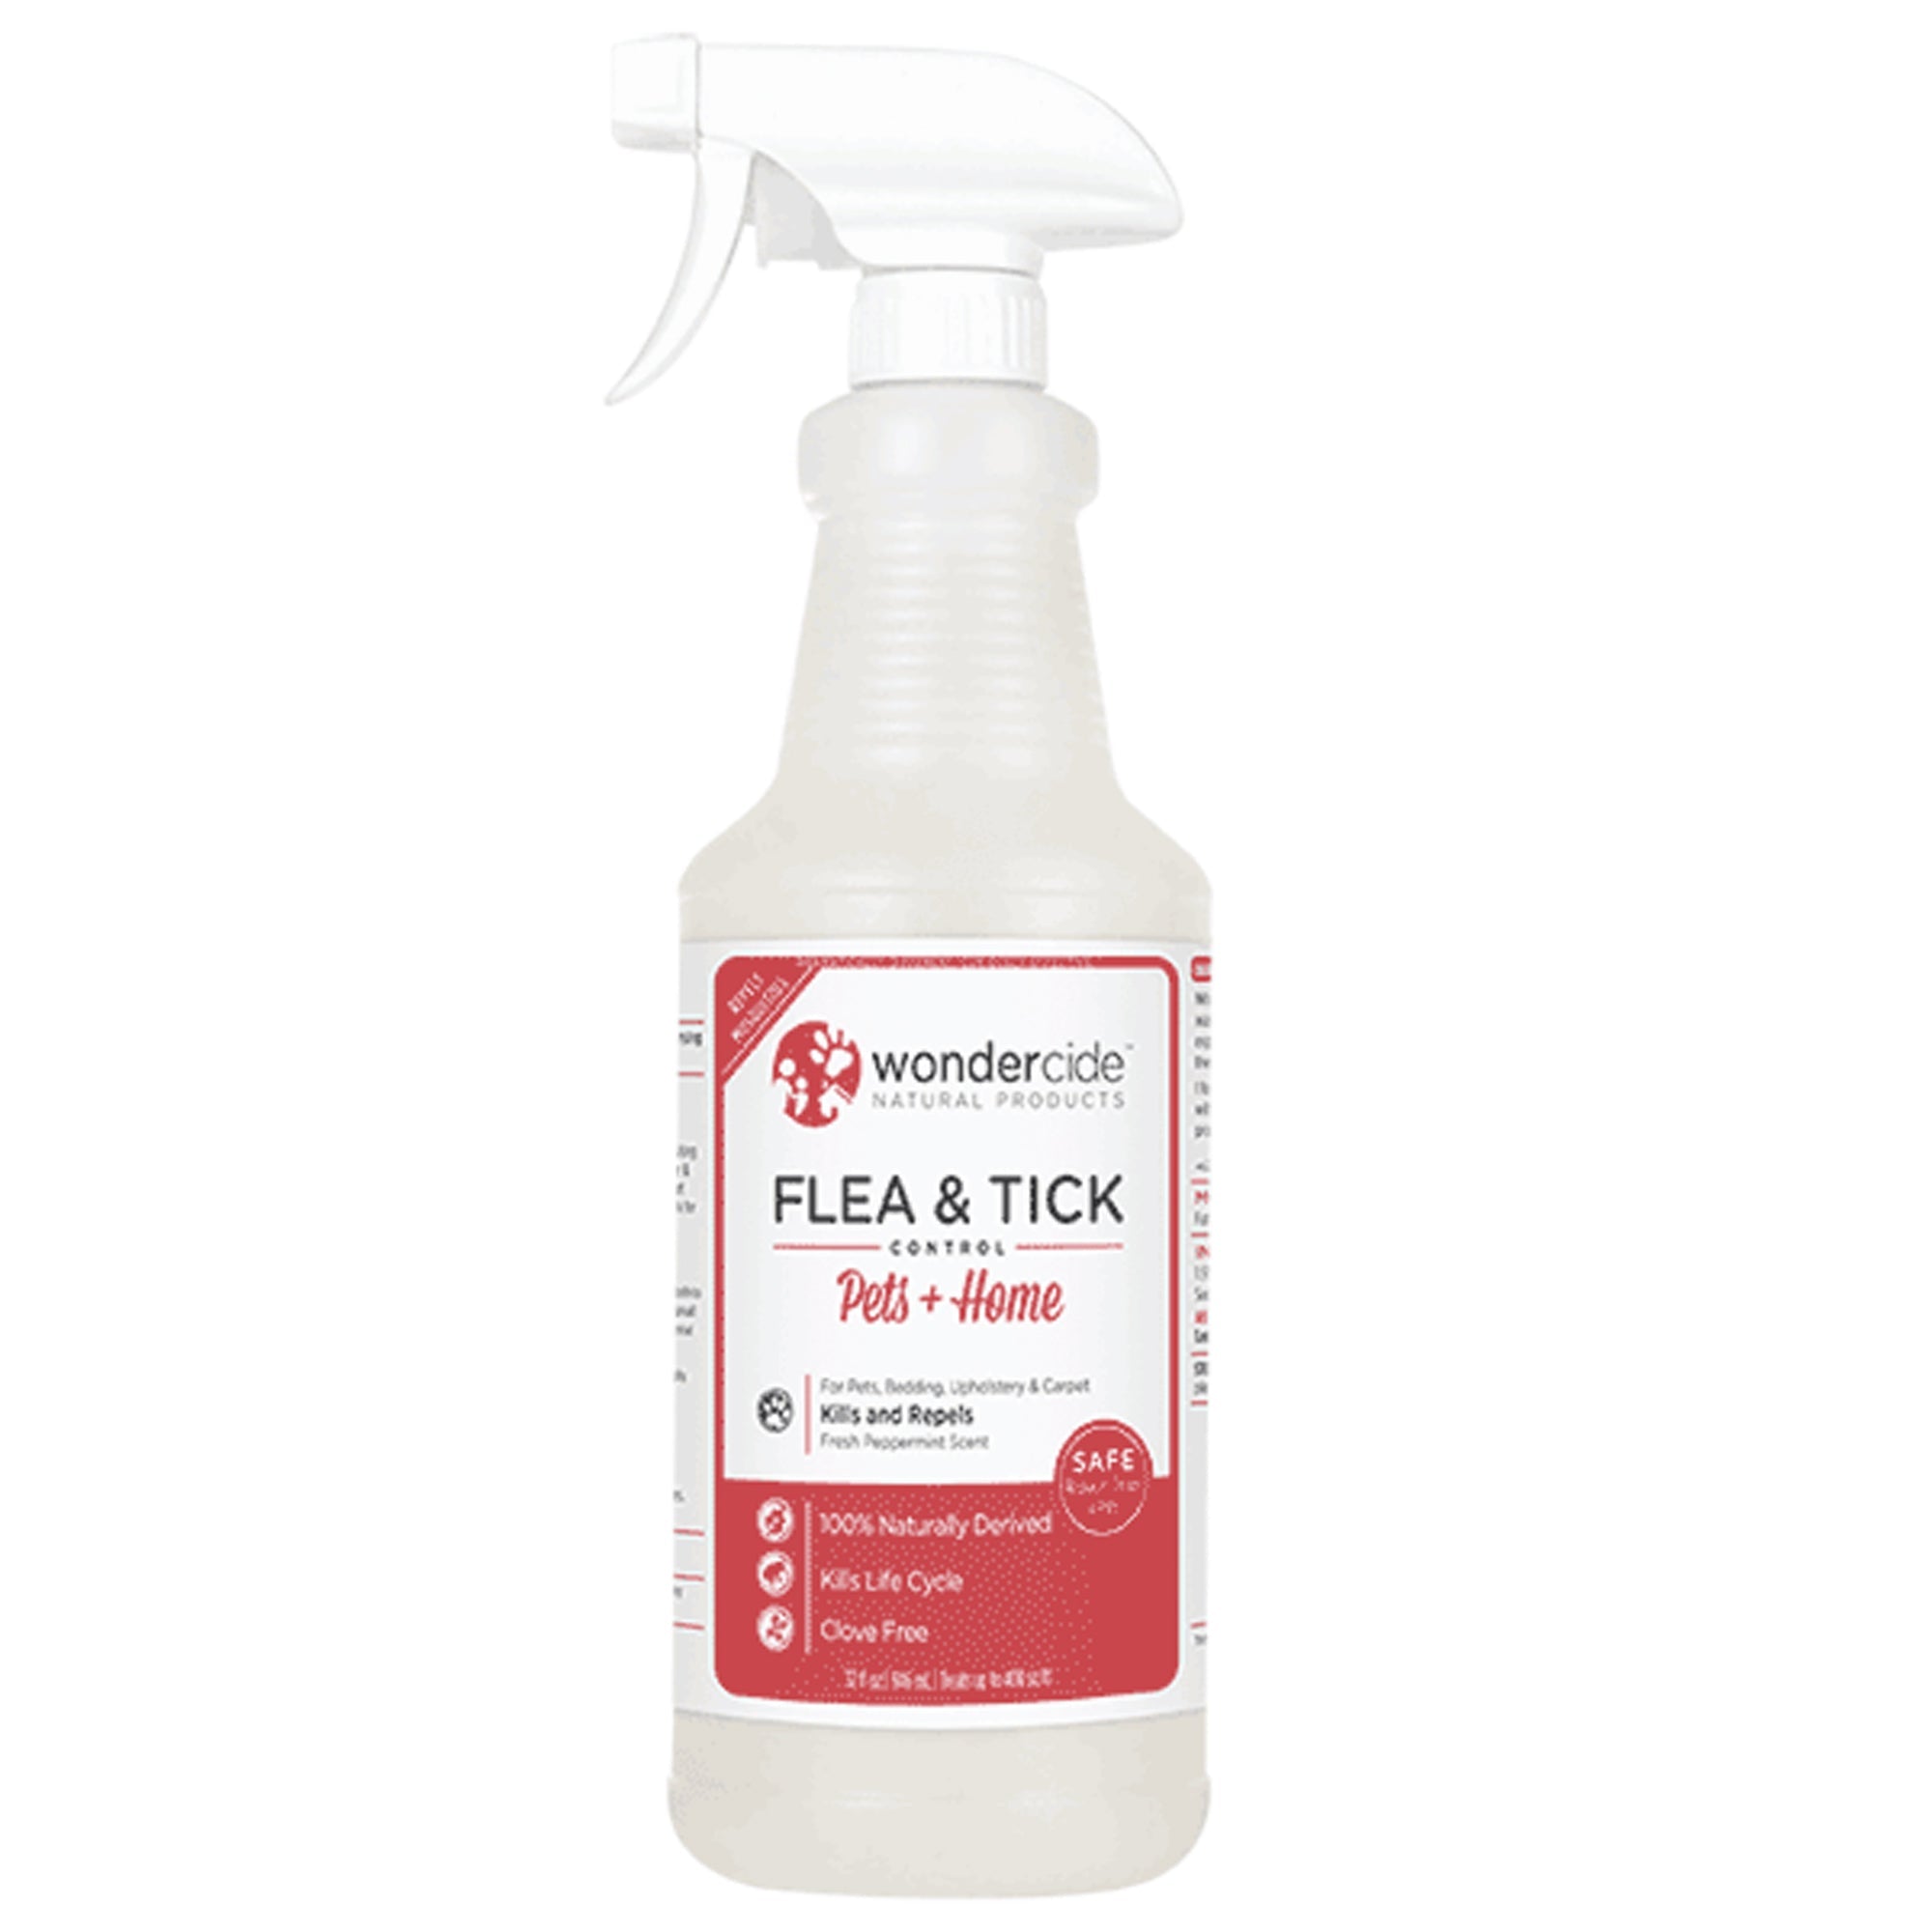 Wondercide Flea Tick And Mosquito Control Spray 32 oz.-Peppermint